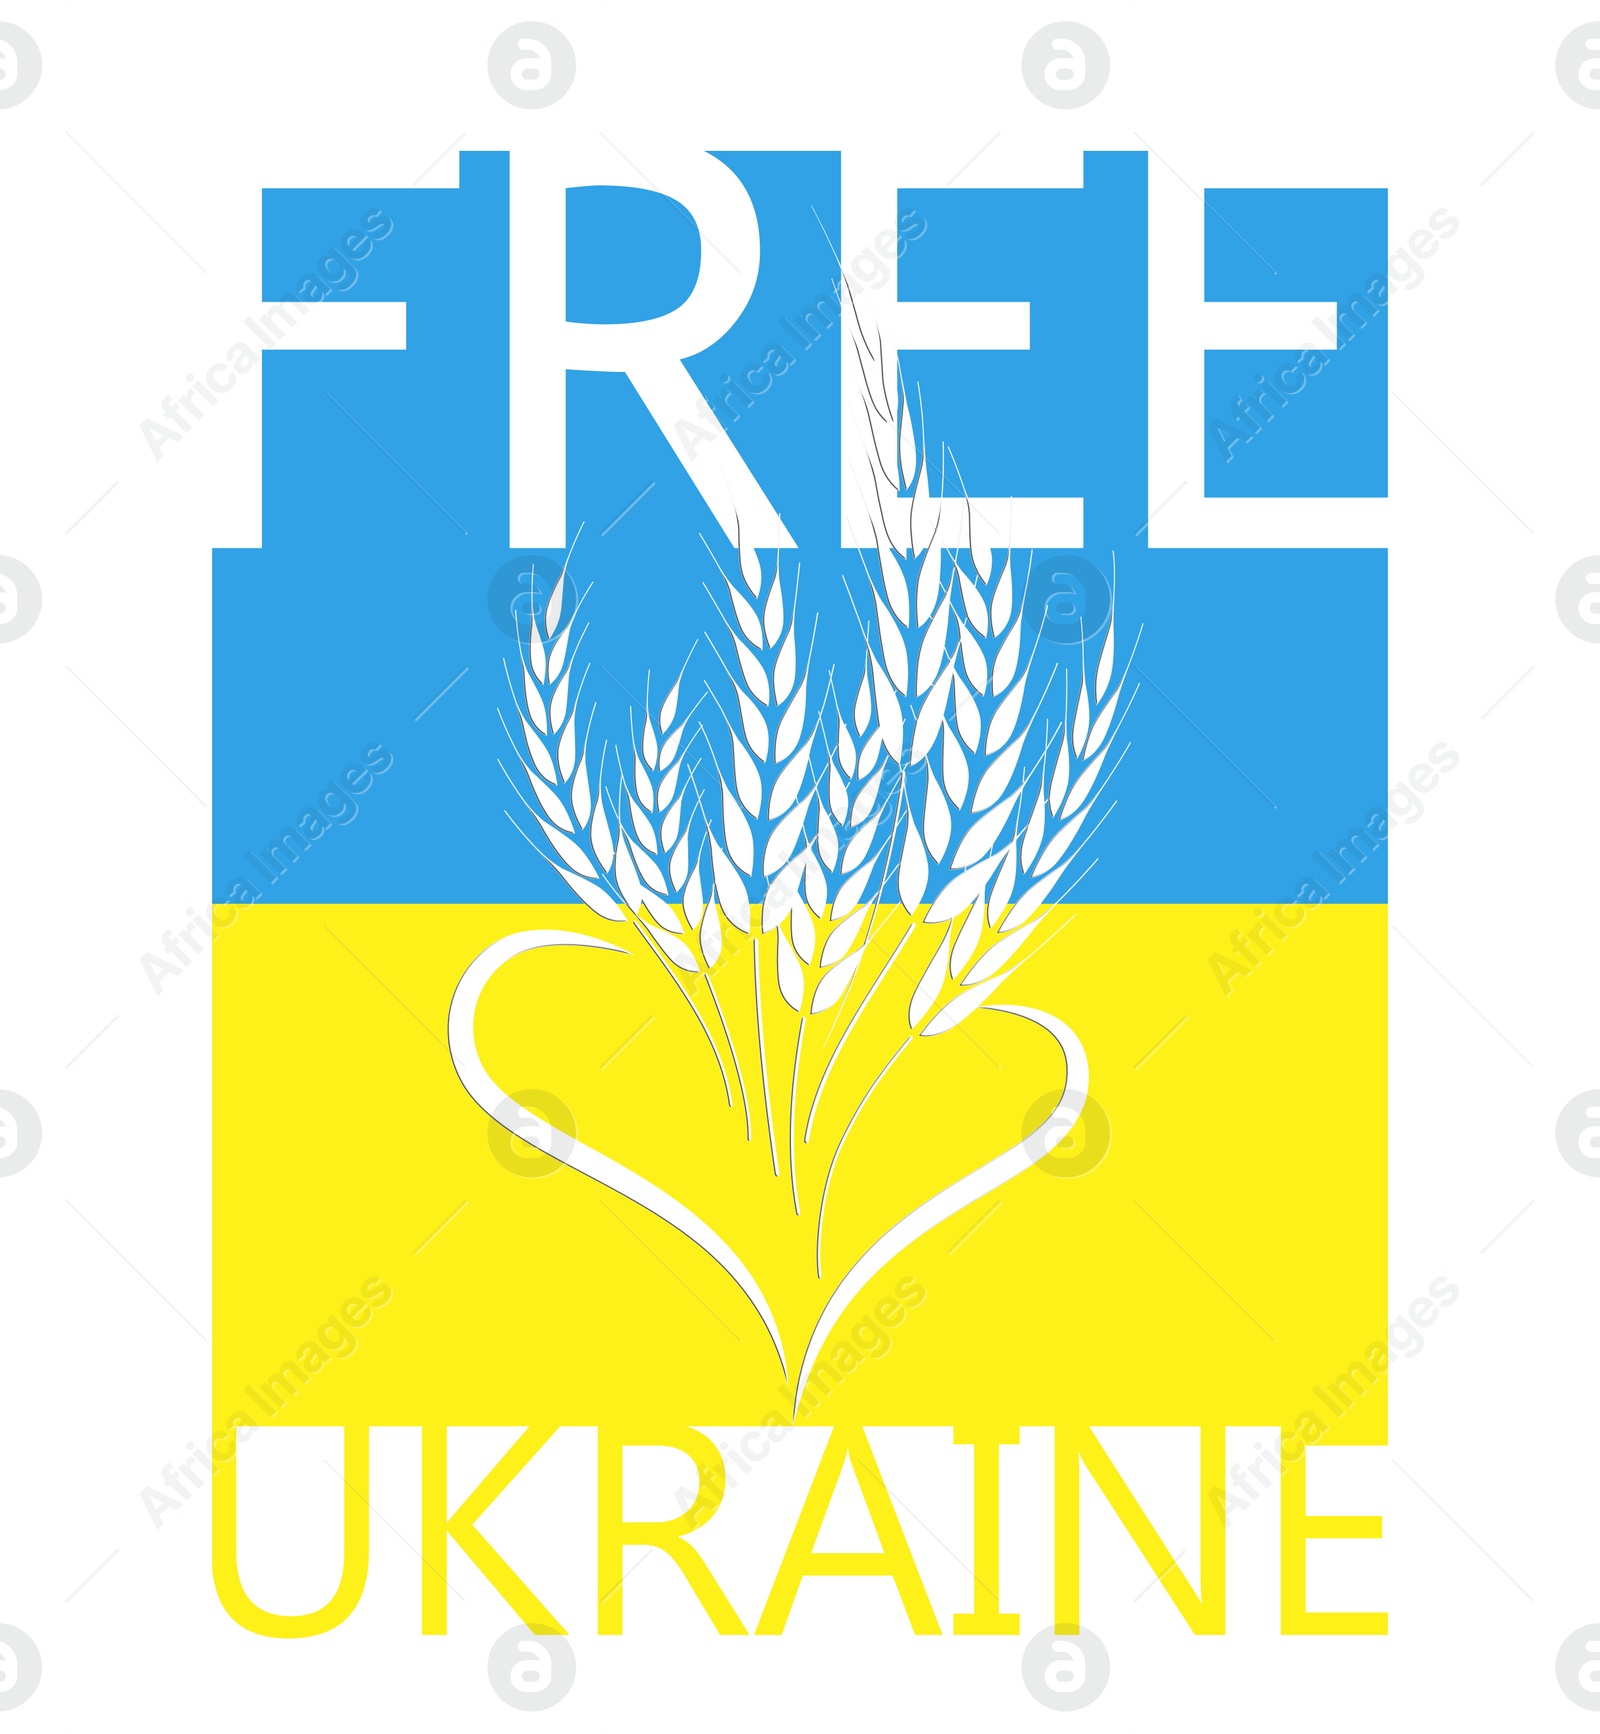 Illustration of Free Ukraine. Phrase and ears of wheat illustration in colors of Ukrainian flag on white background